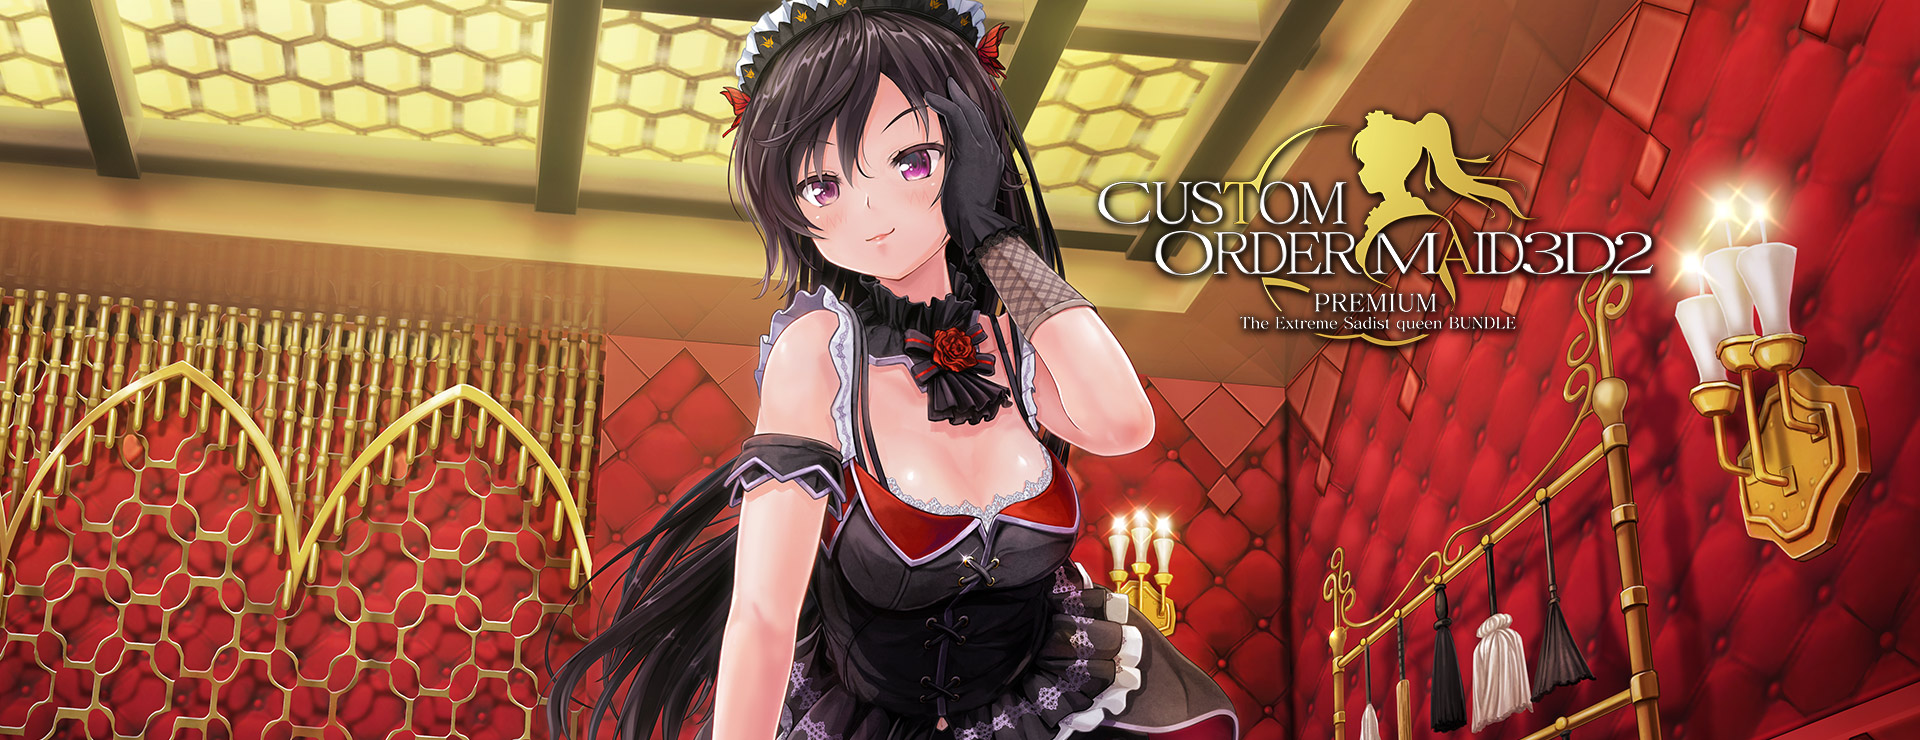 Custom Order Maid 3D2: Extreme Sadist Queen Bundle - シミュレーション ゲーム